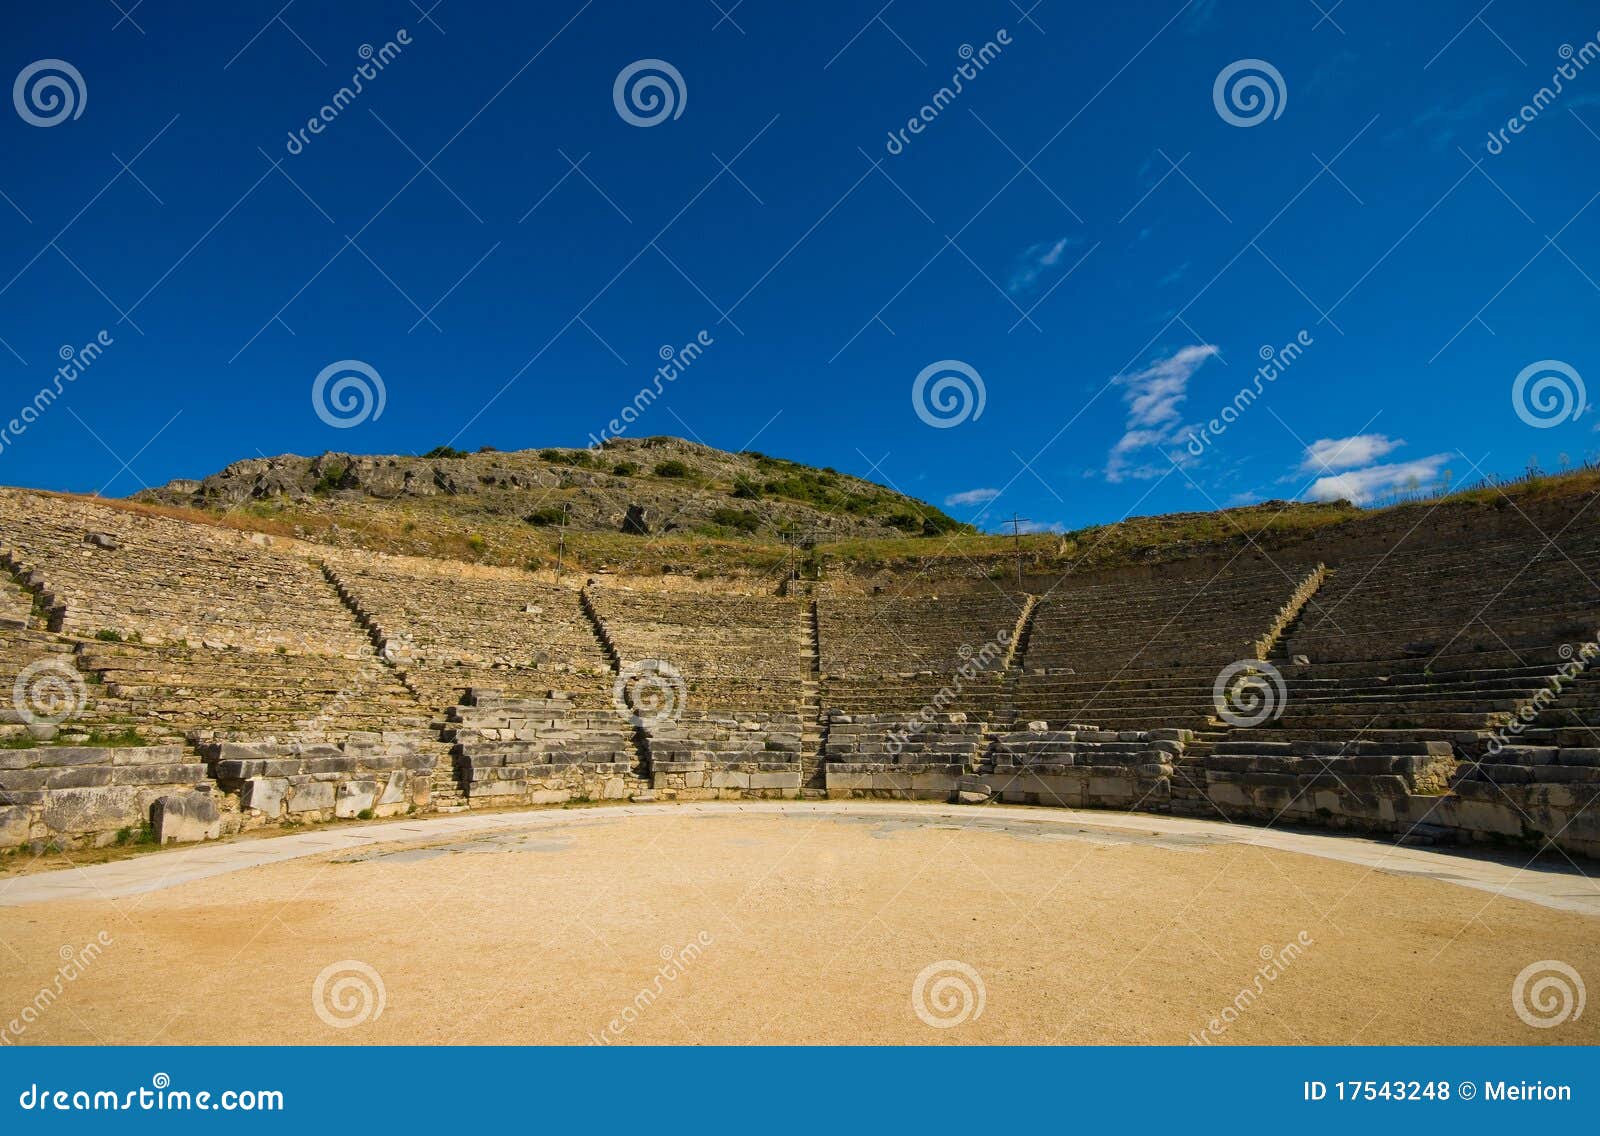 philippi amphitheater